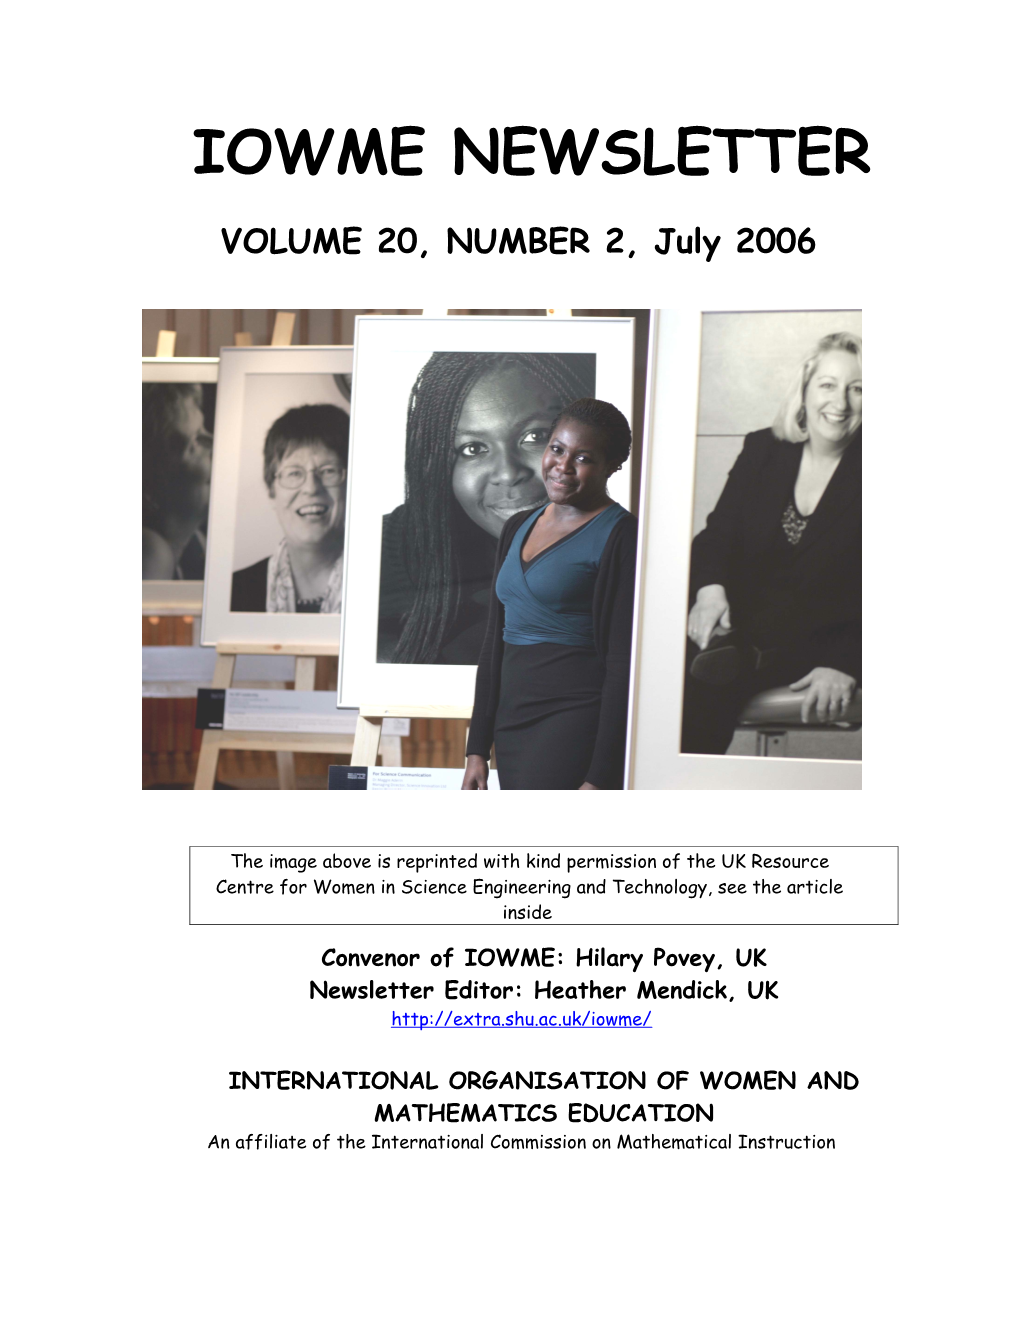 IOWME Newsletter Volume 20, No. 2